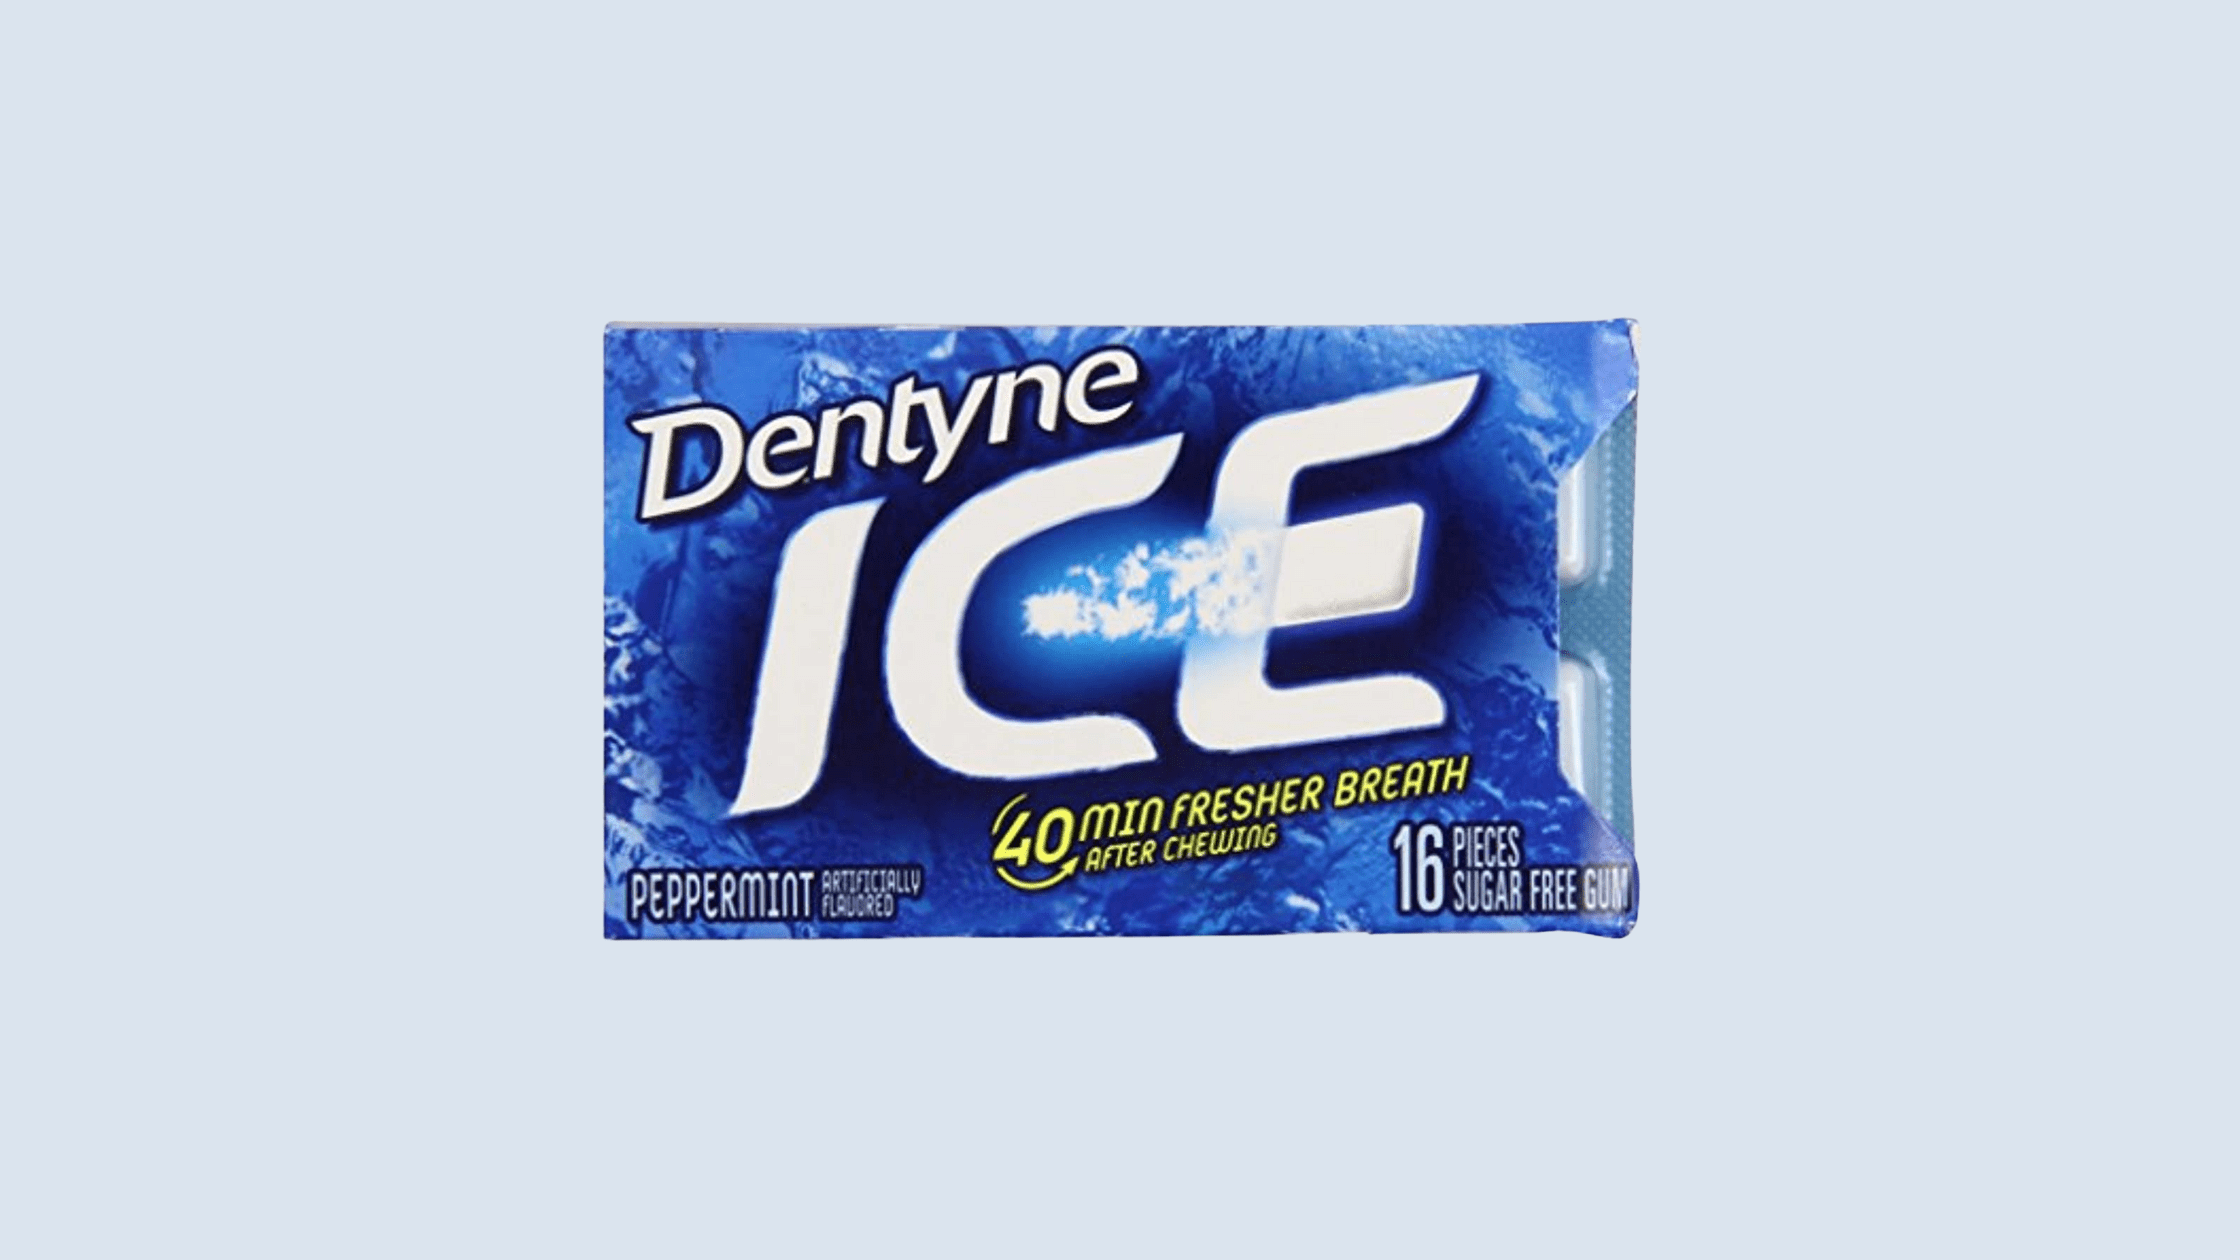 Dentyne Classic Gum